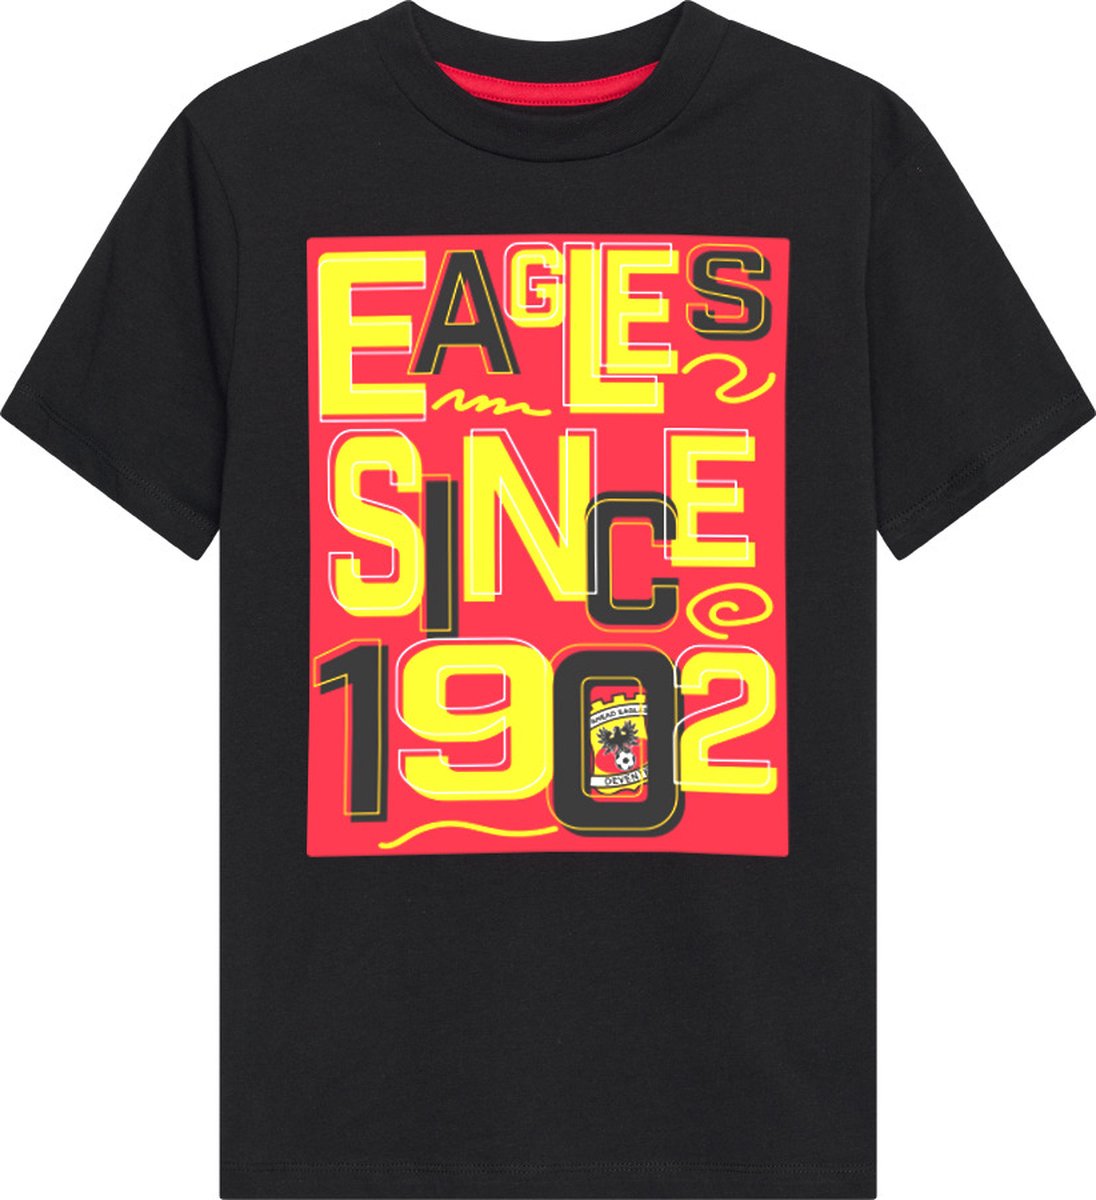 Eagles kids T-shirt - Voetbalshirts kinderen - Go Ahead Eagles - maat 116